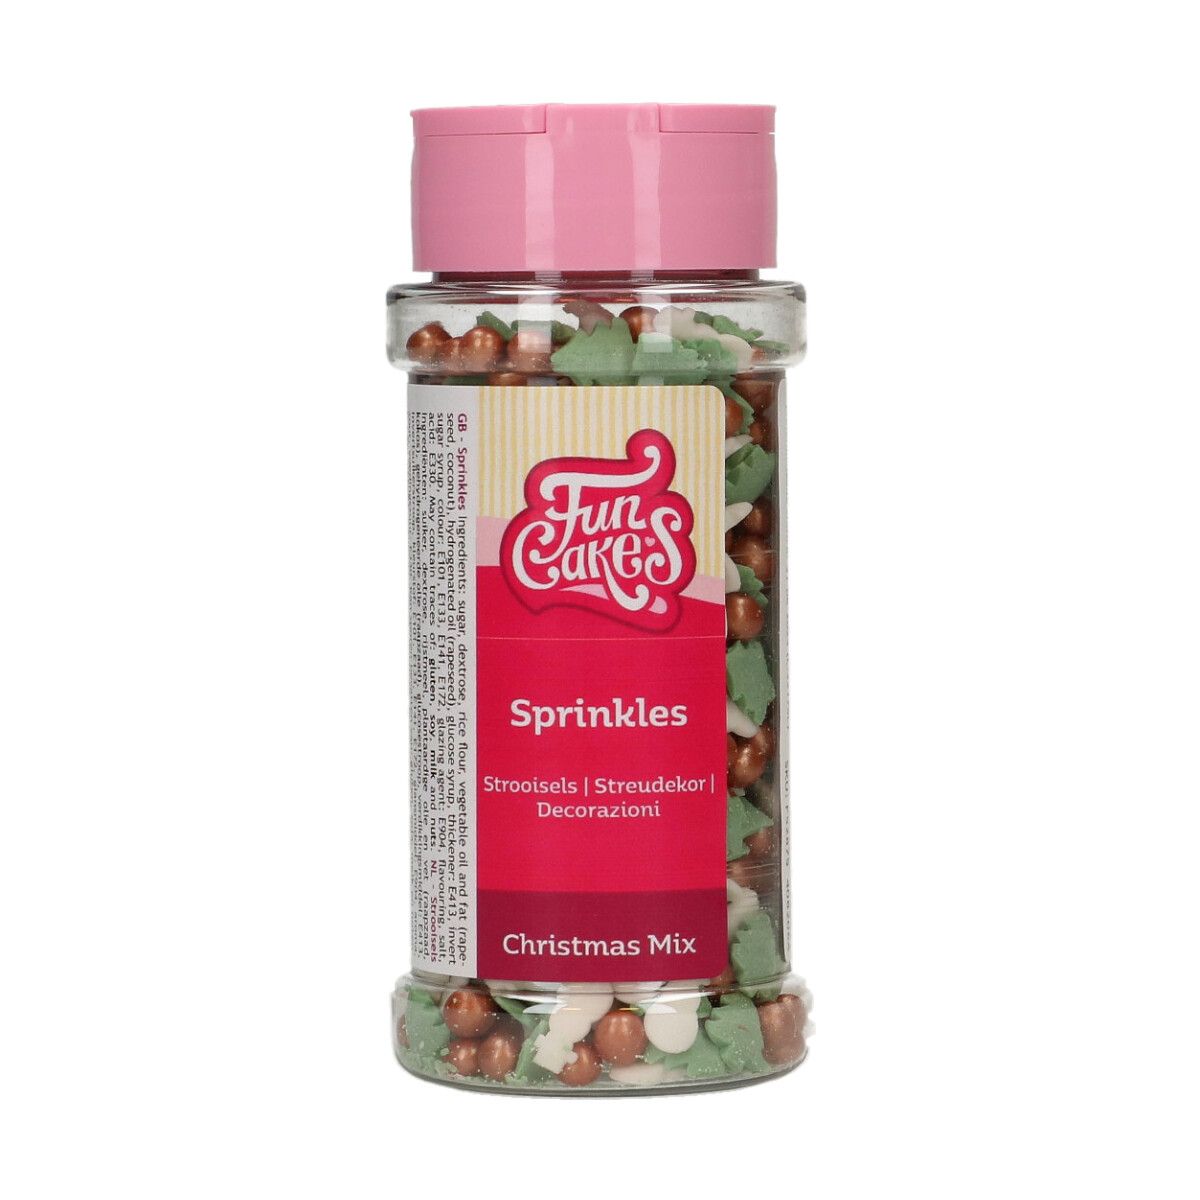 Imagen de producto: https://tienda.postreadiccion.com/img/articulos/secundarias14589-sprinkles-christmas-mix-55-g-funcakes-1.jpg